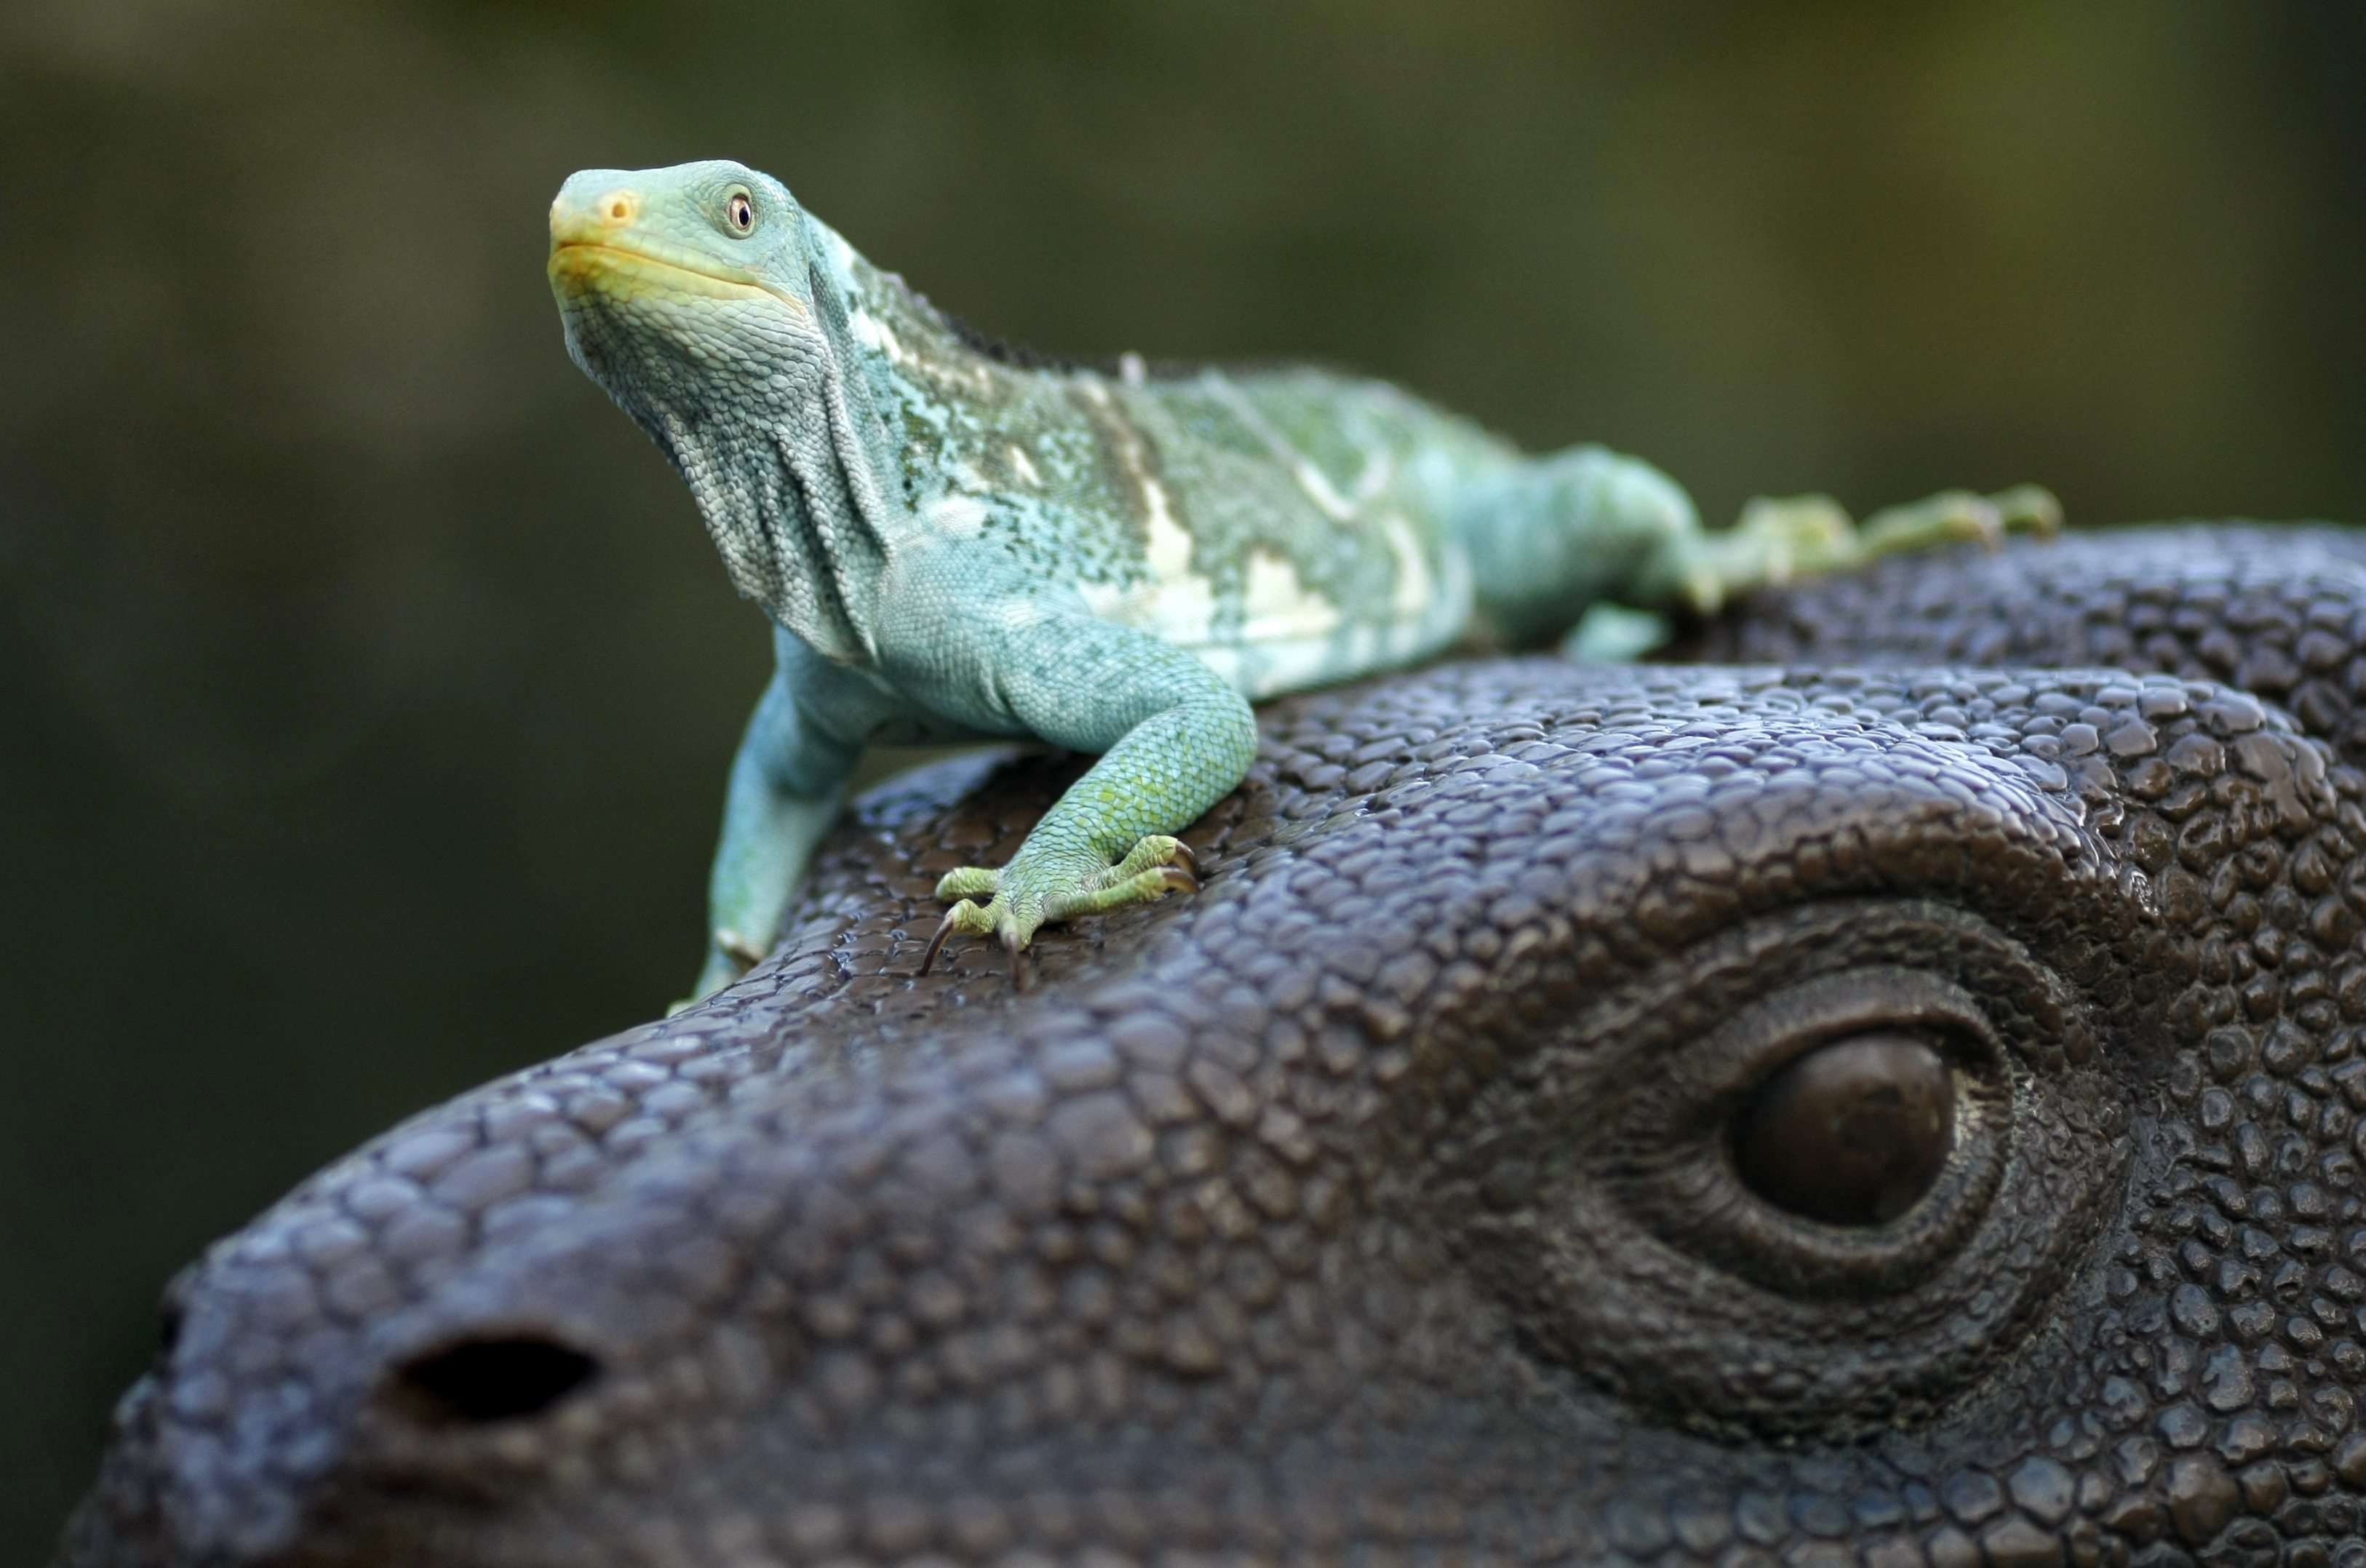 Fijian Crested Iguana faces possible extinction